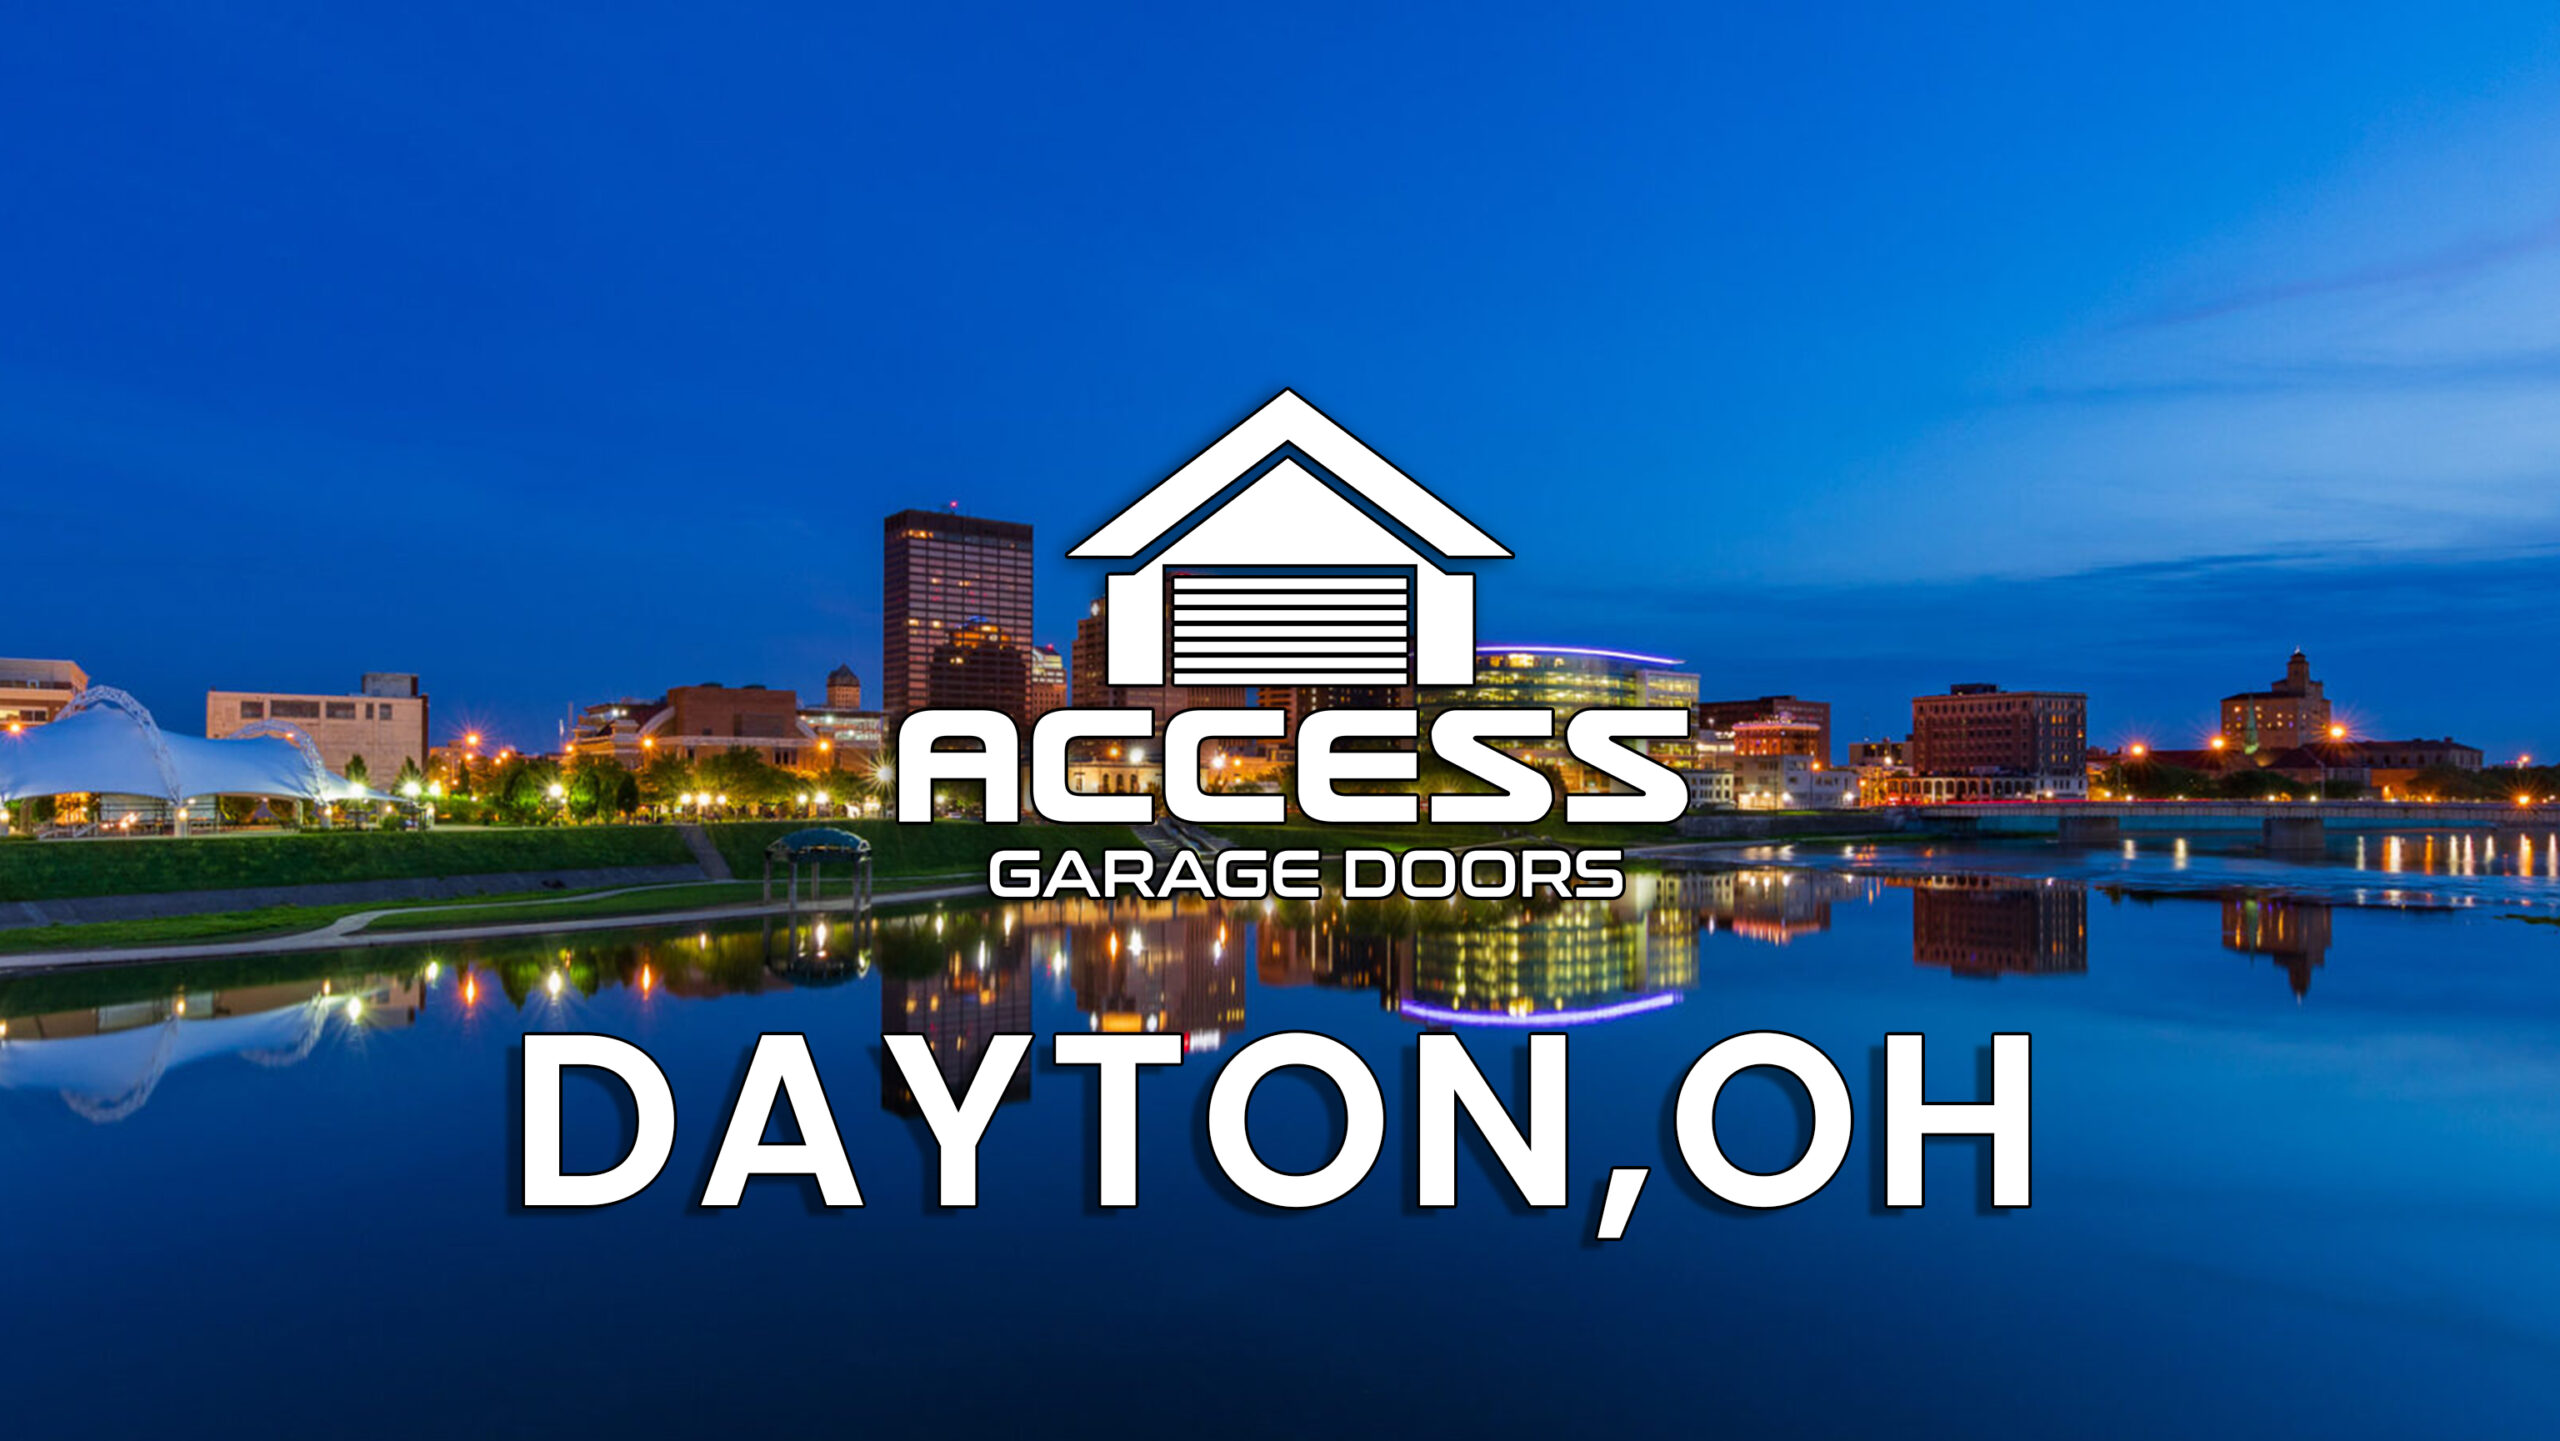 Dayton, OH new garage door franchise location